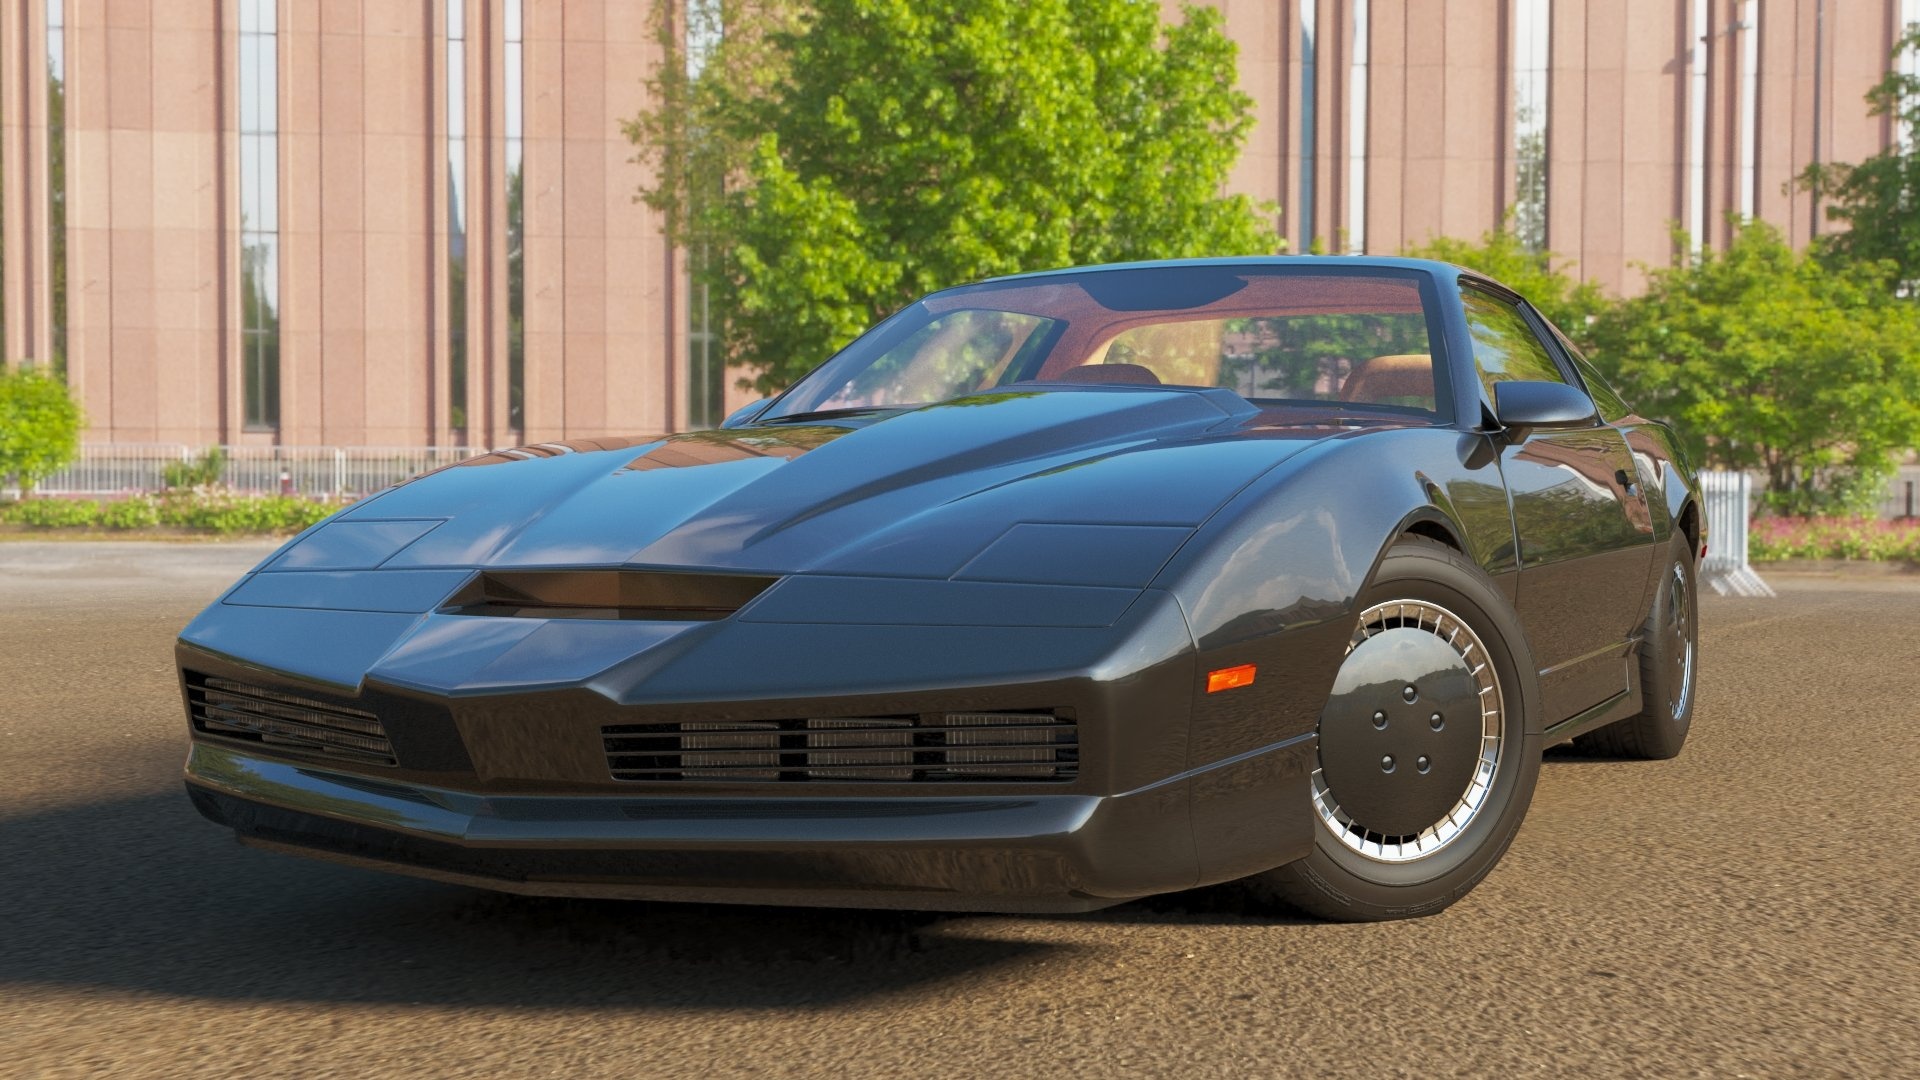 Knight Rider 3D model, Detailed car design, Digital recreations, Impressive modeling work, 1920x1080 Full HD Desktop